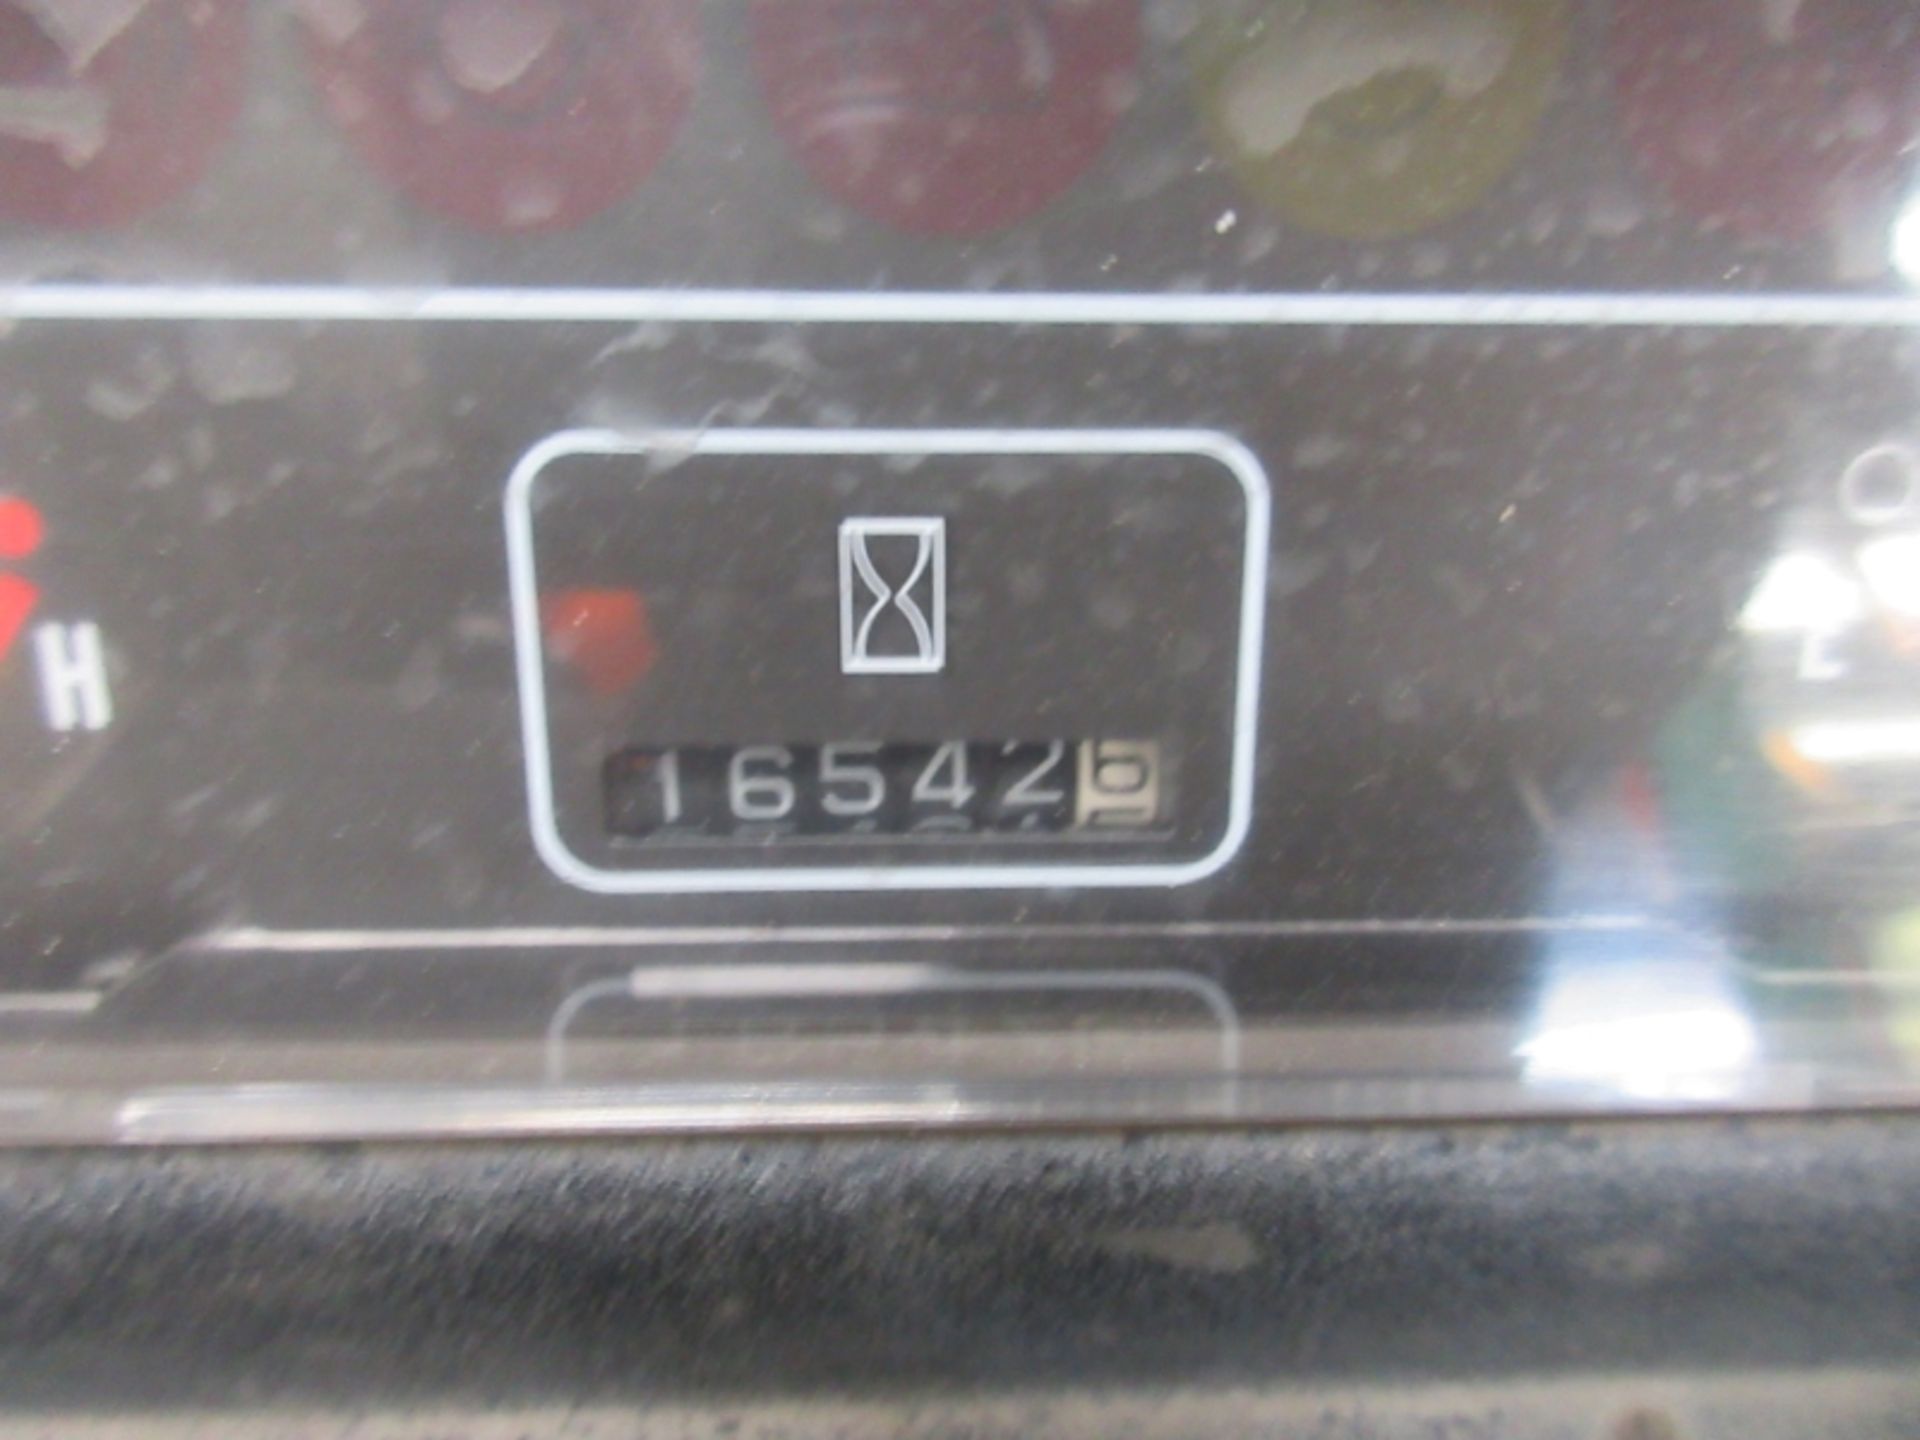 MITSUBISHI FD25 Plant Diesel - VIN: EF148B63003 - Year: 1998 - 16,542 Hours - Duplex Forklift, - Image 7 of 7